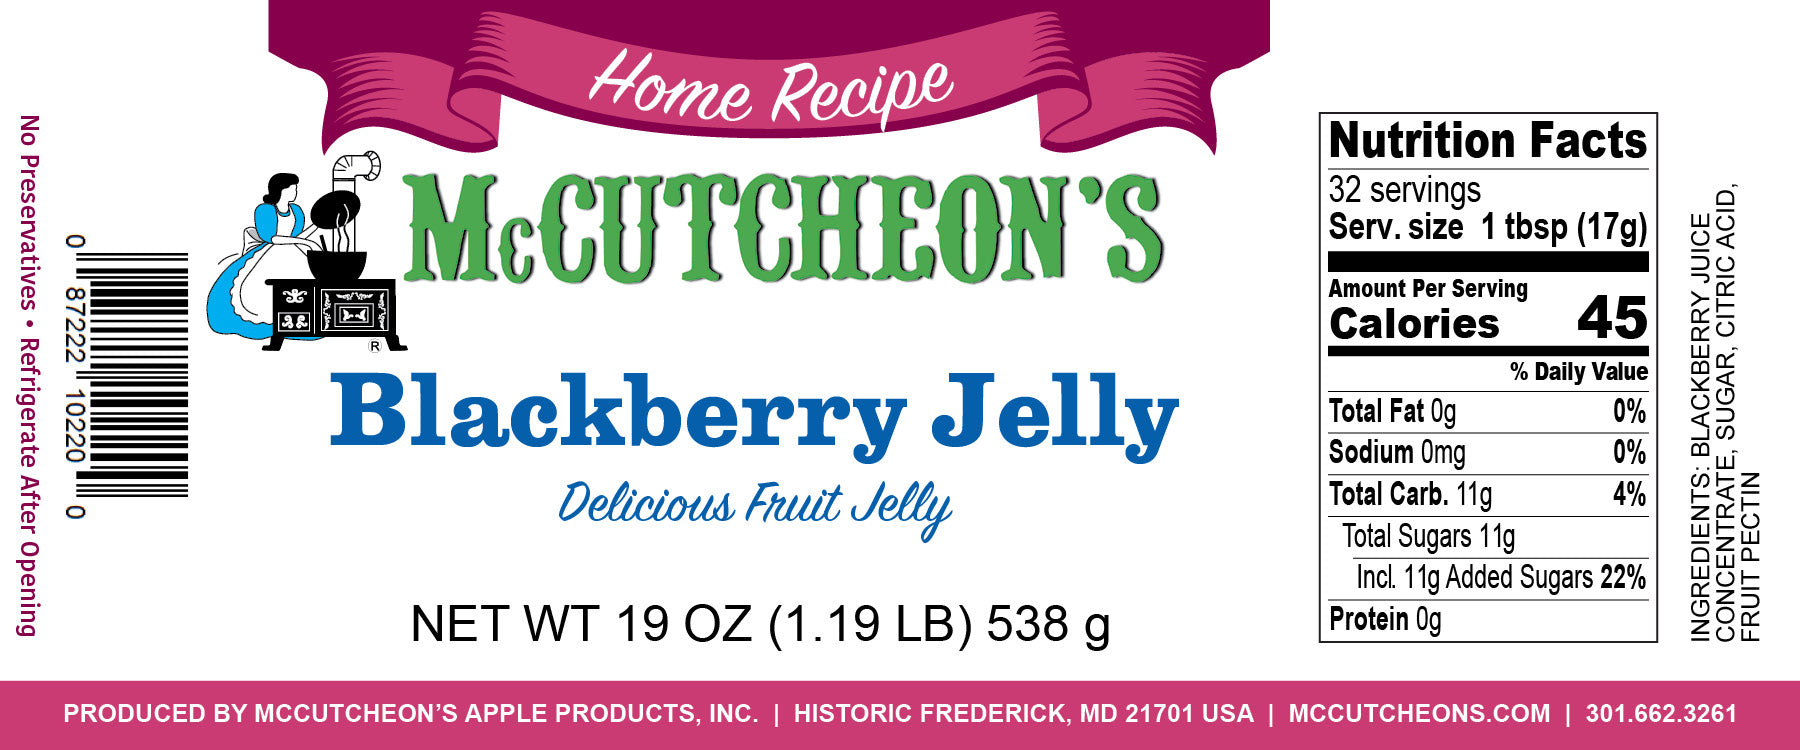 nutrition label for McCutcheon's blackberry jelly